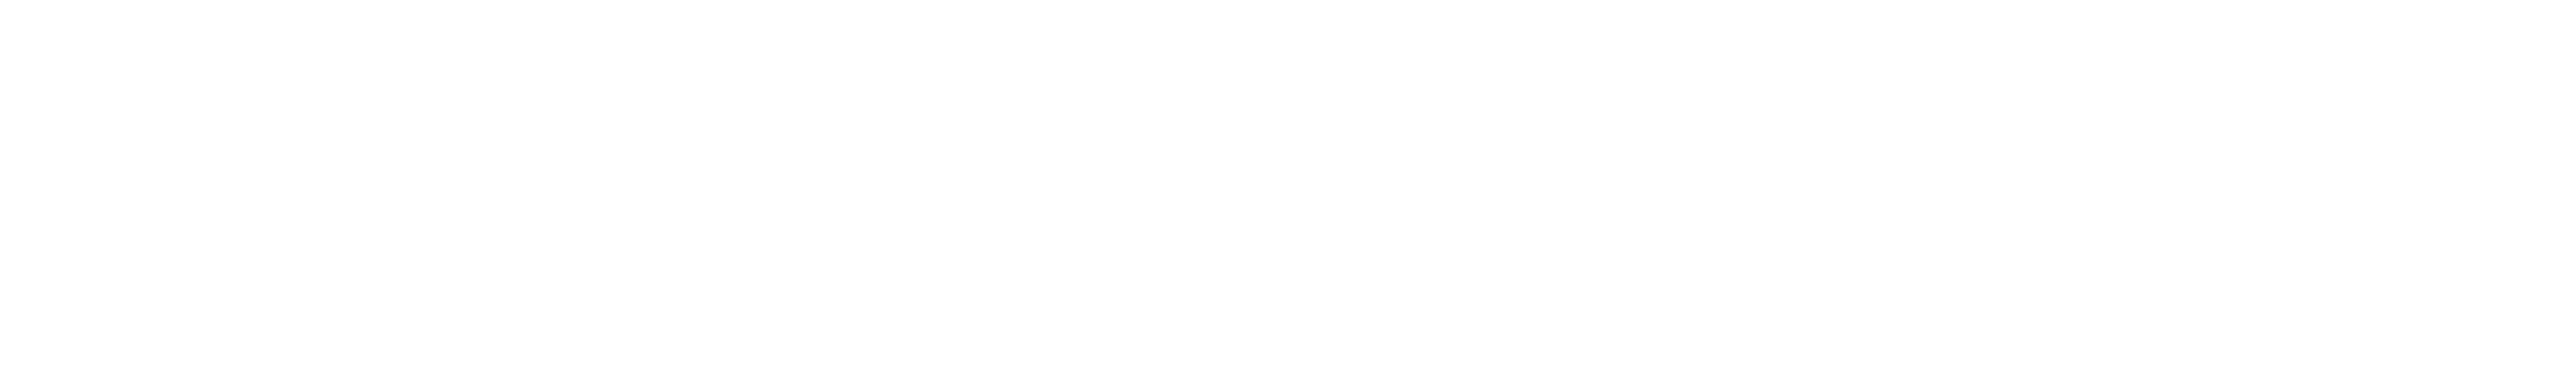 concensus-technologies-white-logo